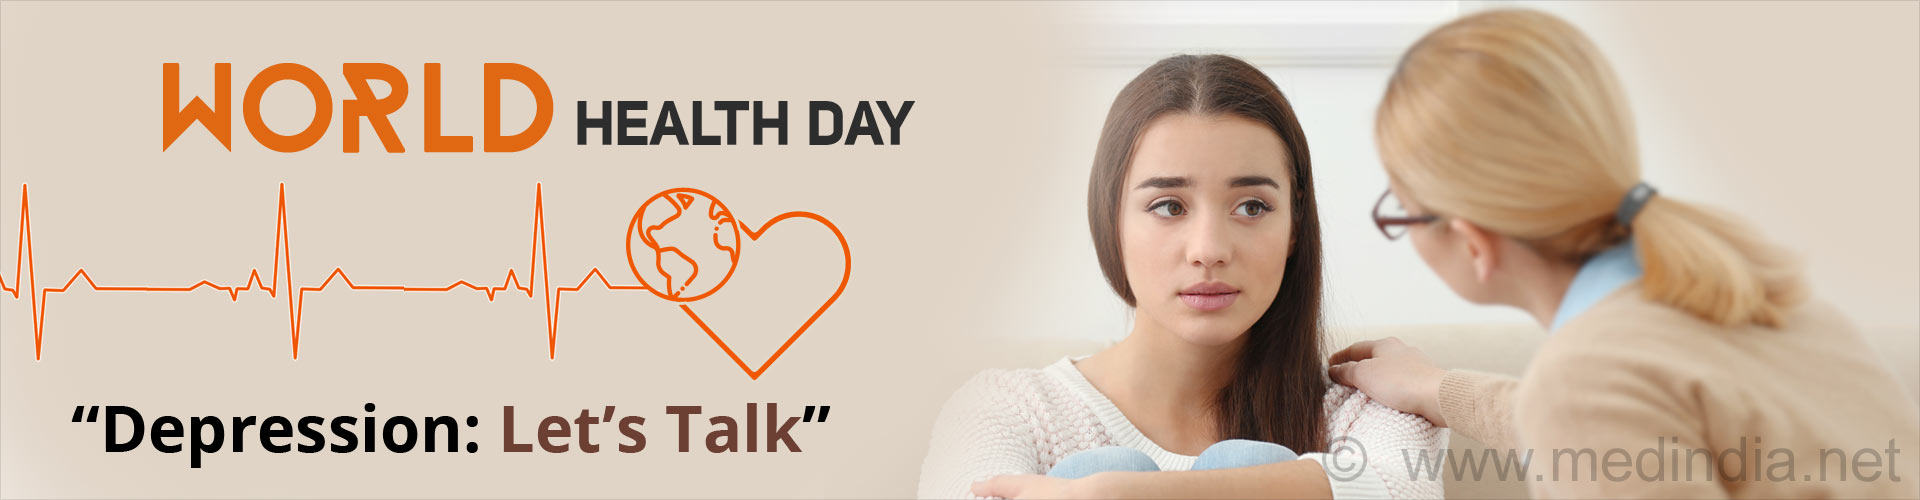 World Health Day - 